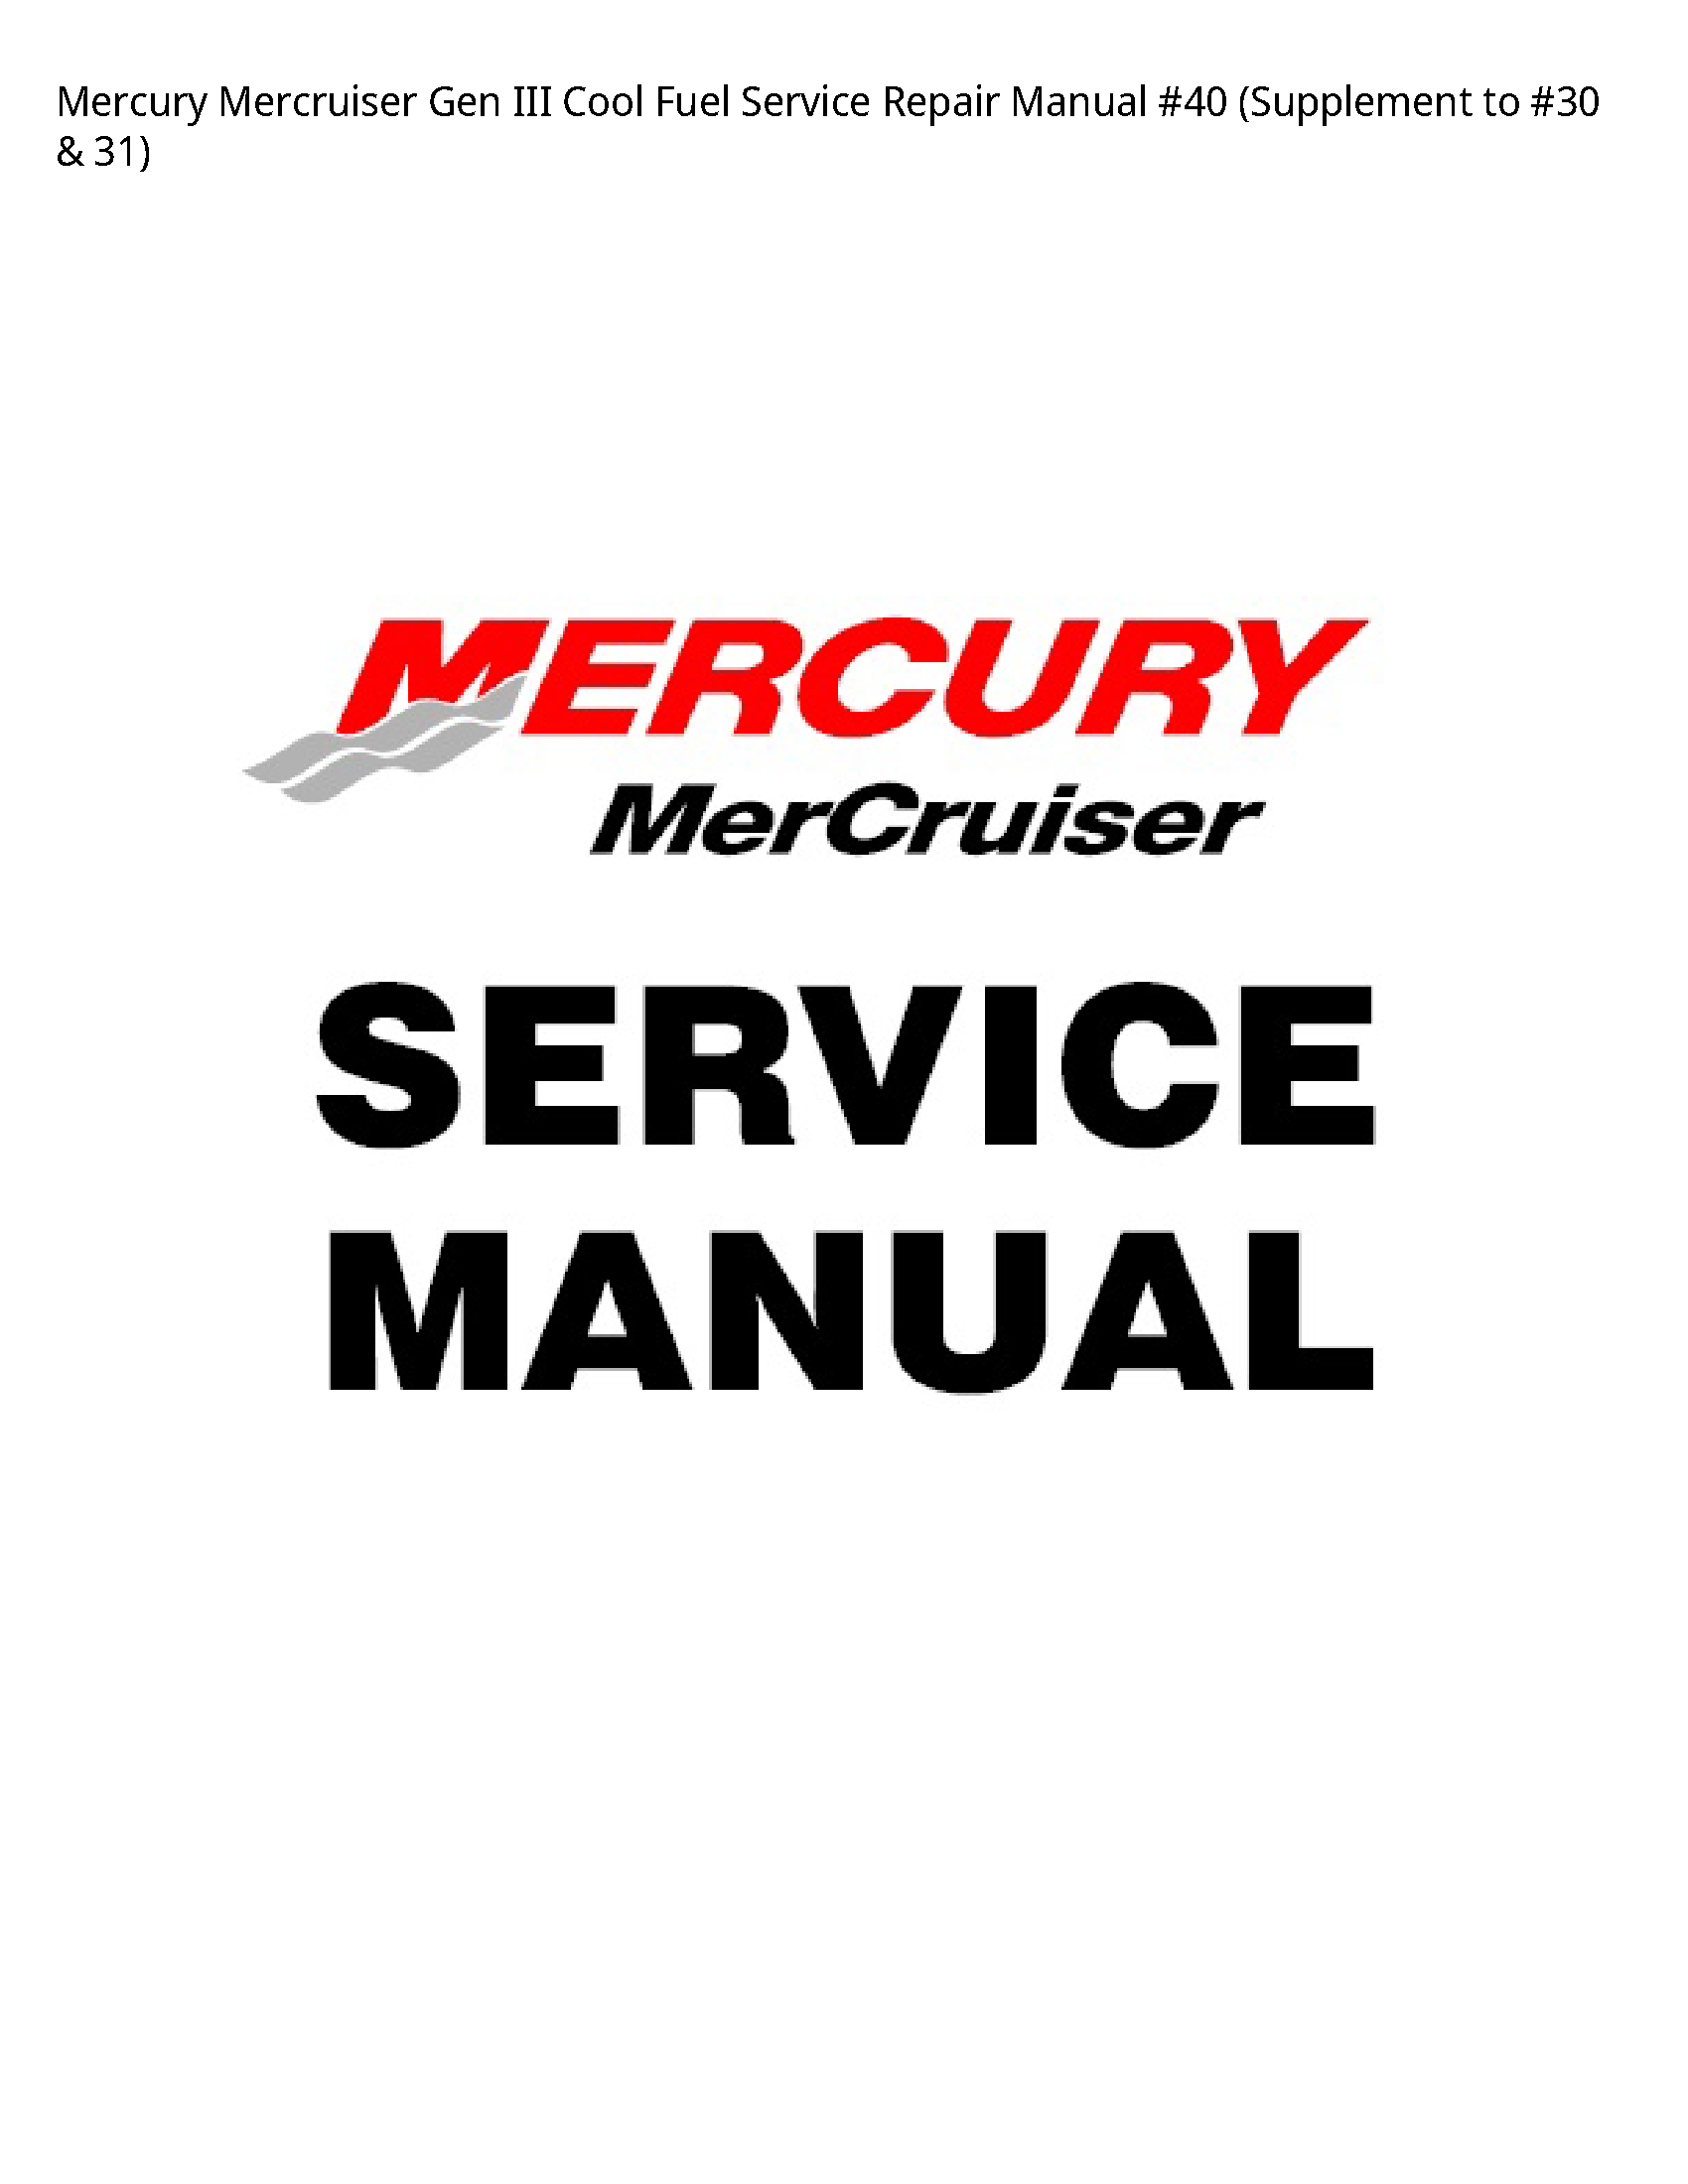 Mercury Mercruiser Gen III Cool Fuel manual